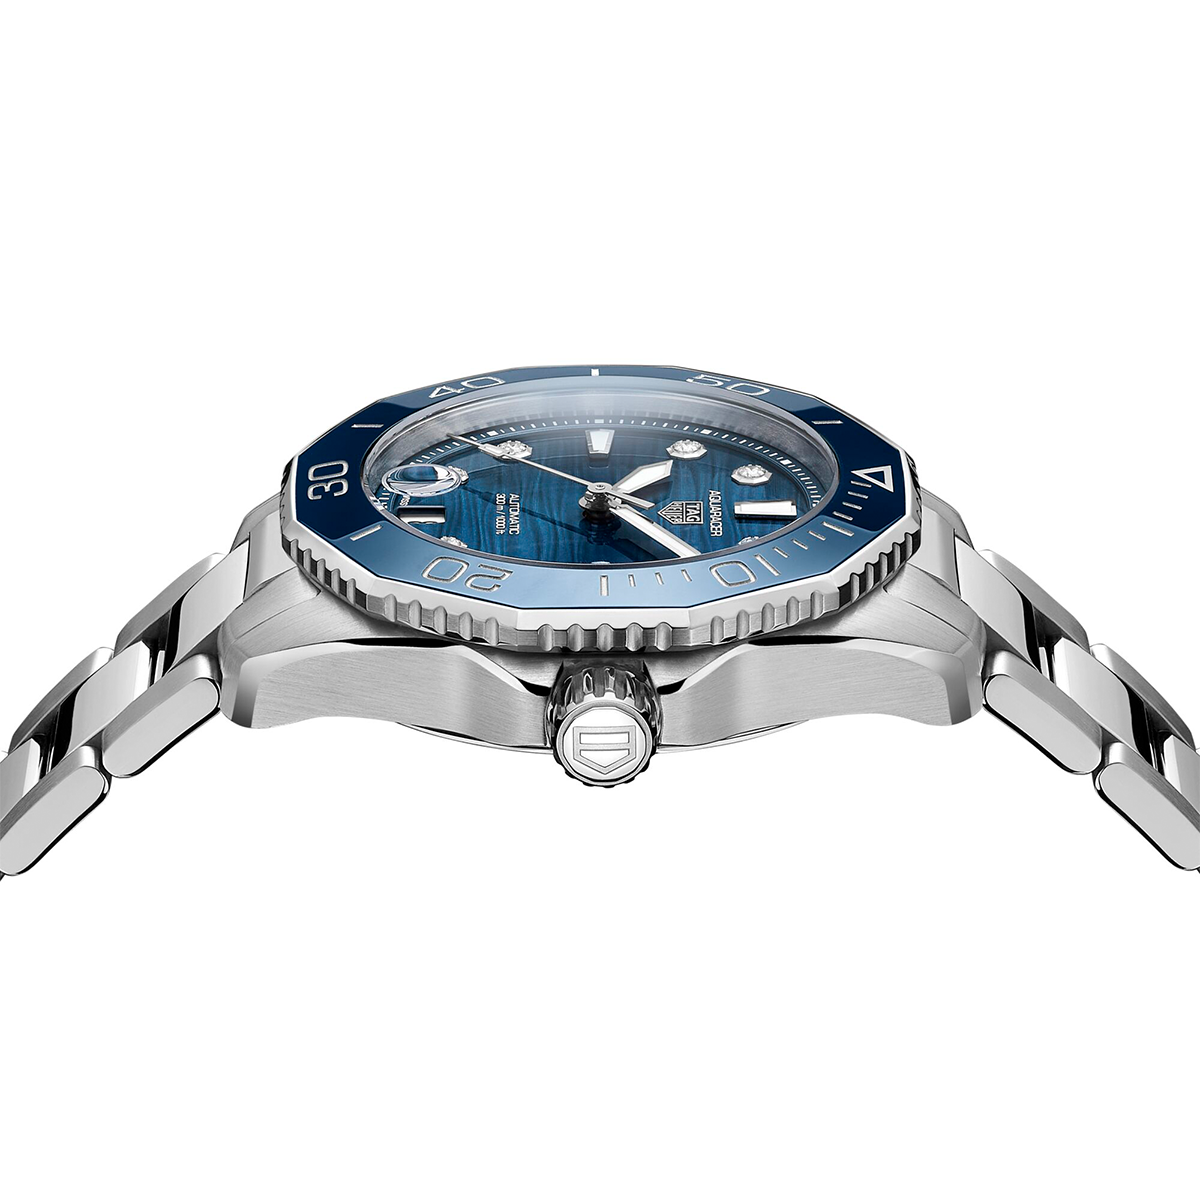 Aquaracer Professional 300 36mm Steel Automatic Watch